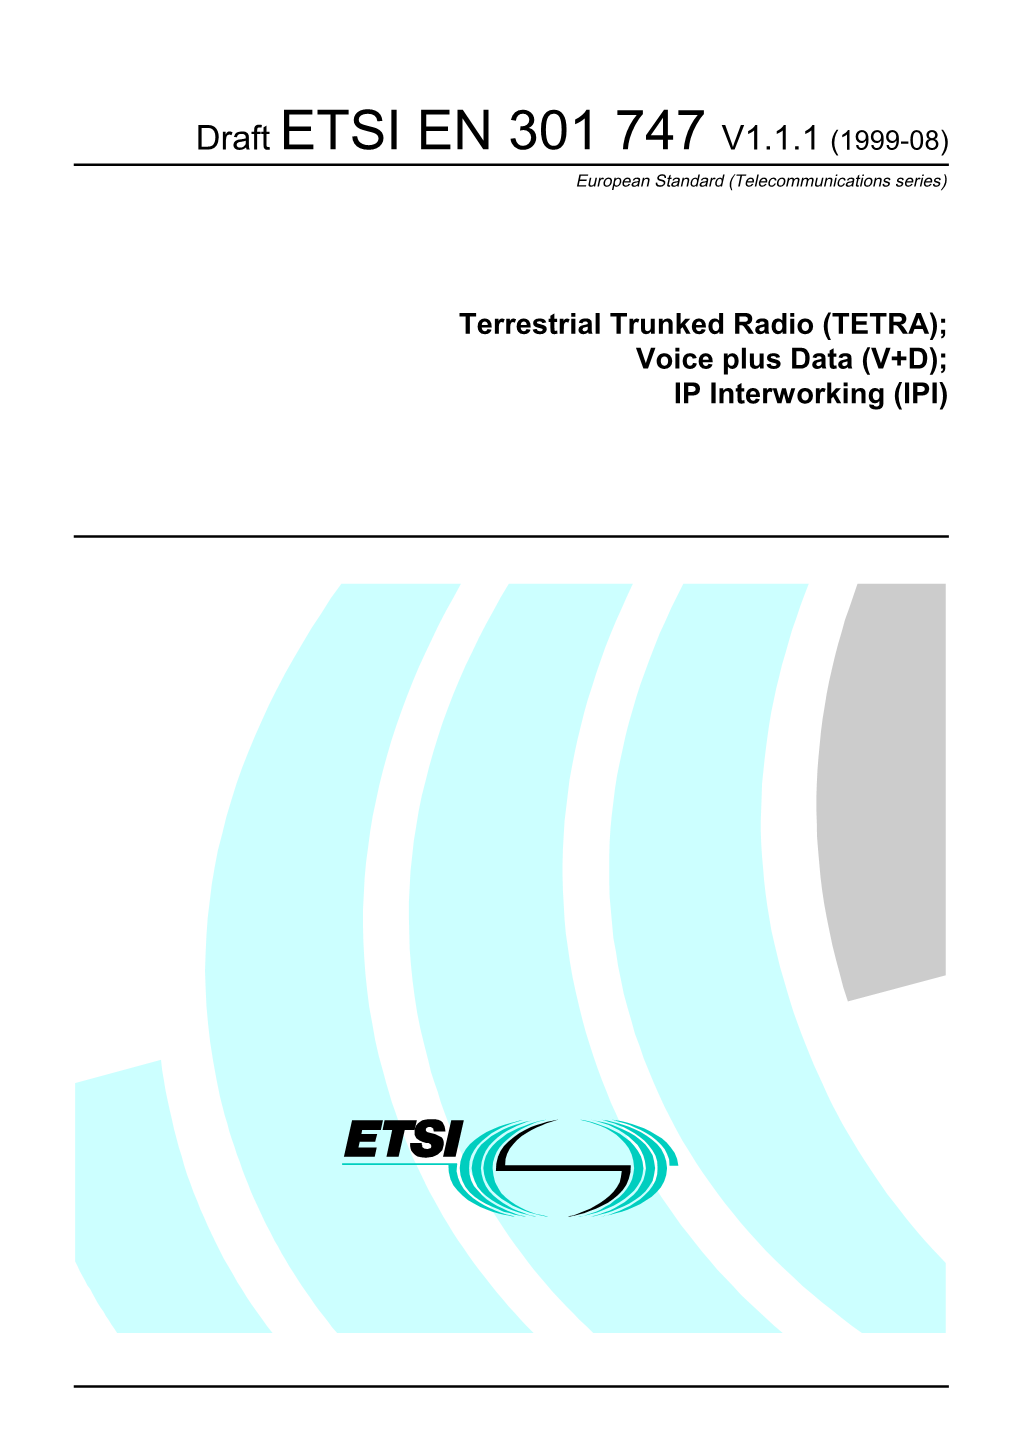 TETRA); Voice Plus Data (V+D); IP Interworking (IPI) 2 Draft ETSI EN 301 747 V1.1.1 (1999-08)